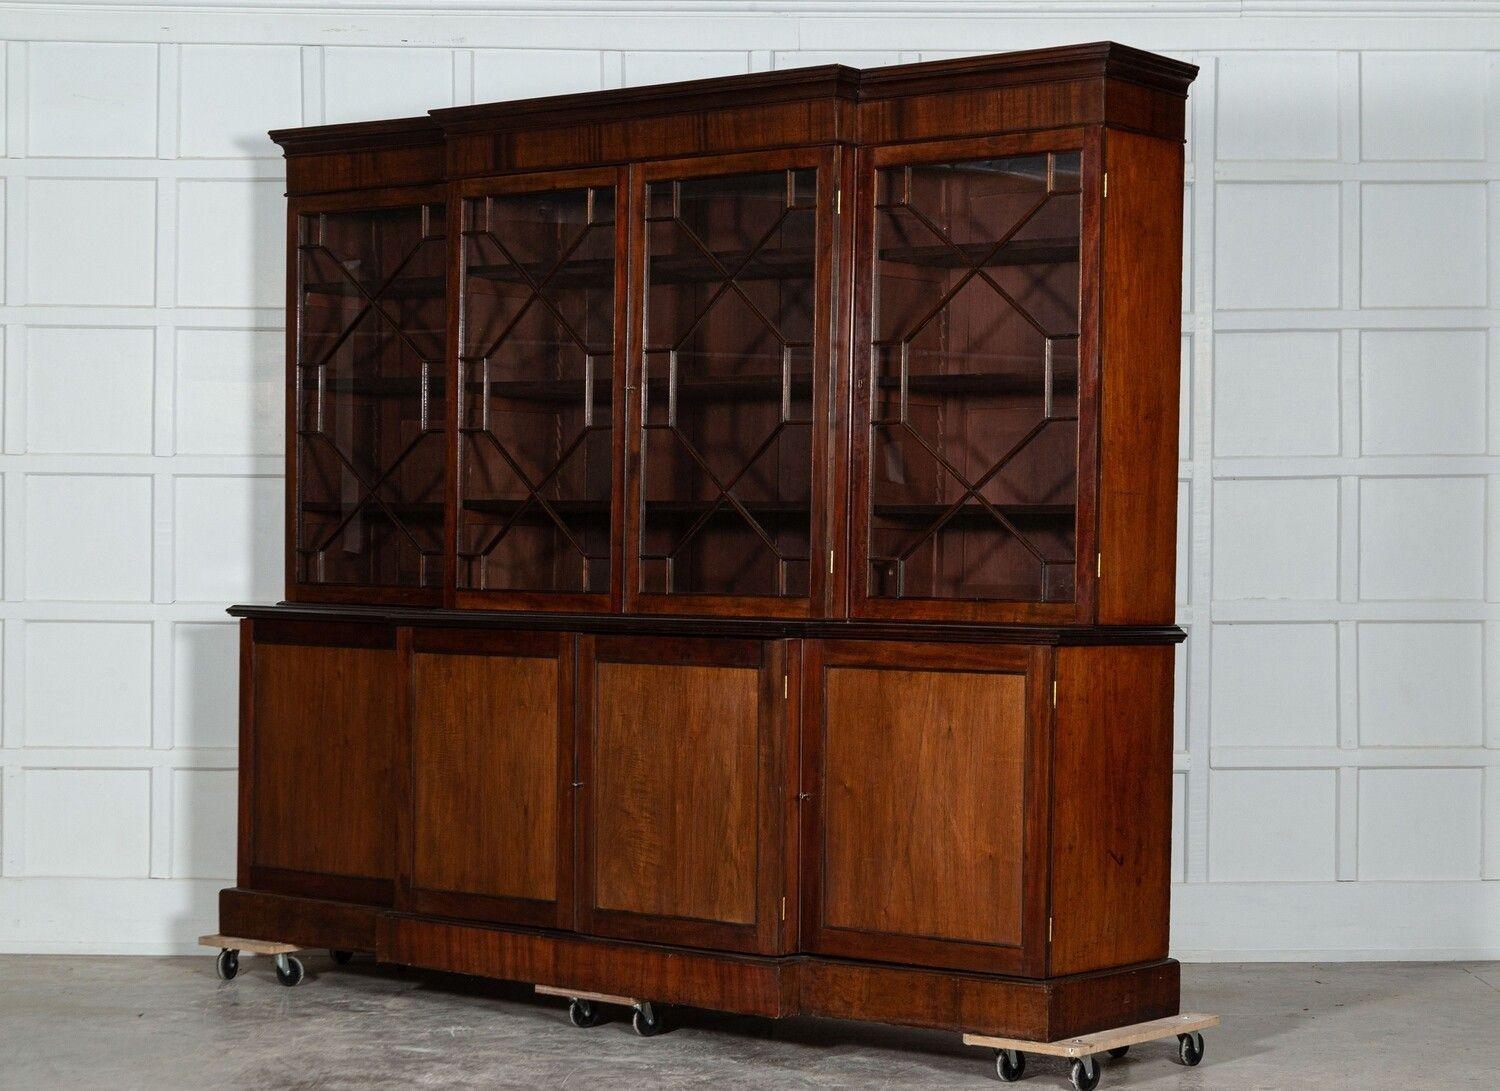 circa 1880
Large 19thC English Mahogany Astragal Glazed Breakfront Bookcase
sku 1544
Together W263 x D52 x H211 cm
Base W261 x D52 x H87 cm
Top W263 x D37 x H124 cm